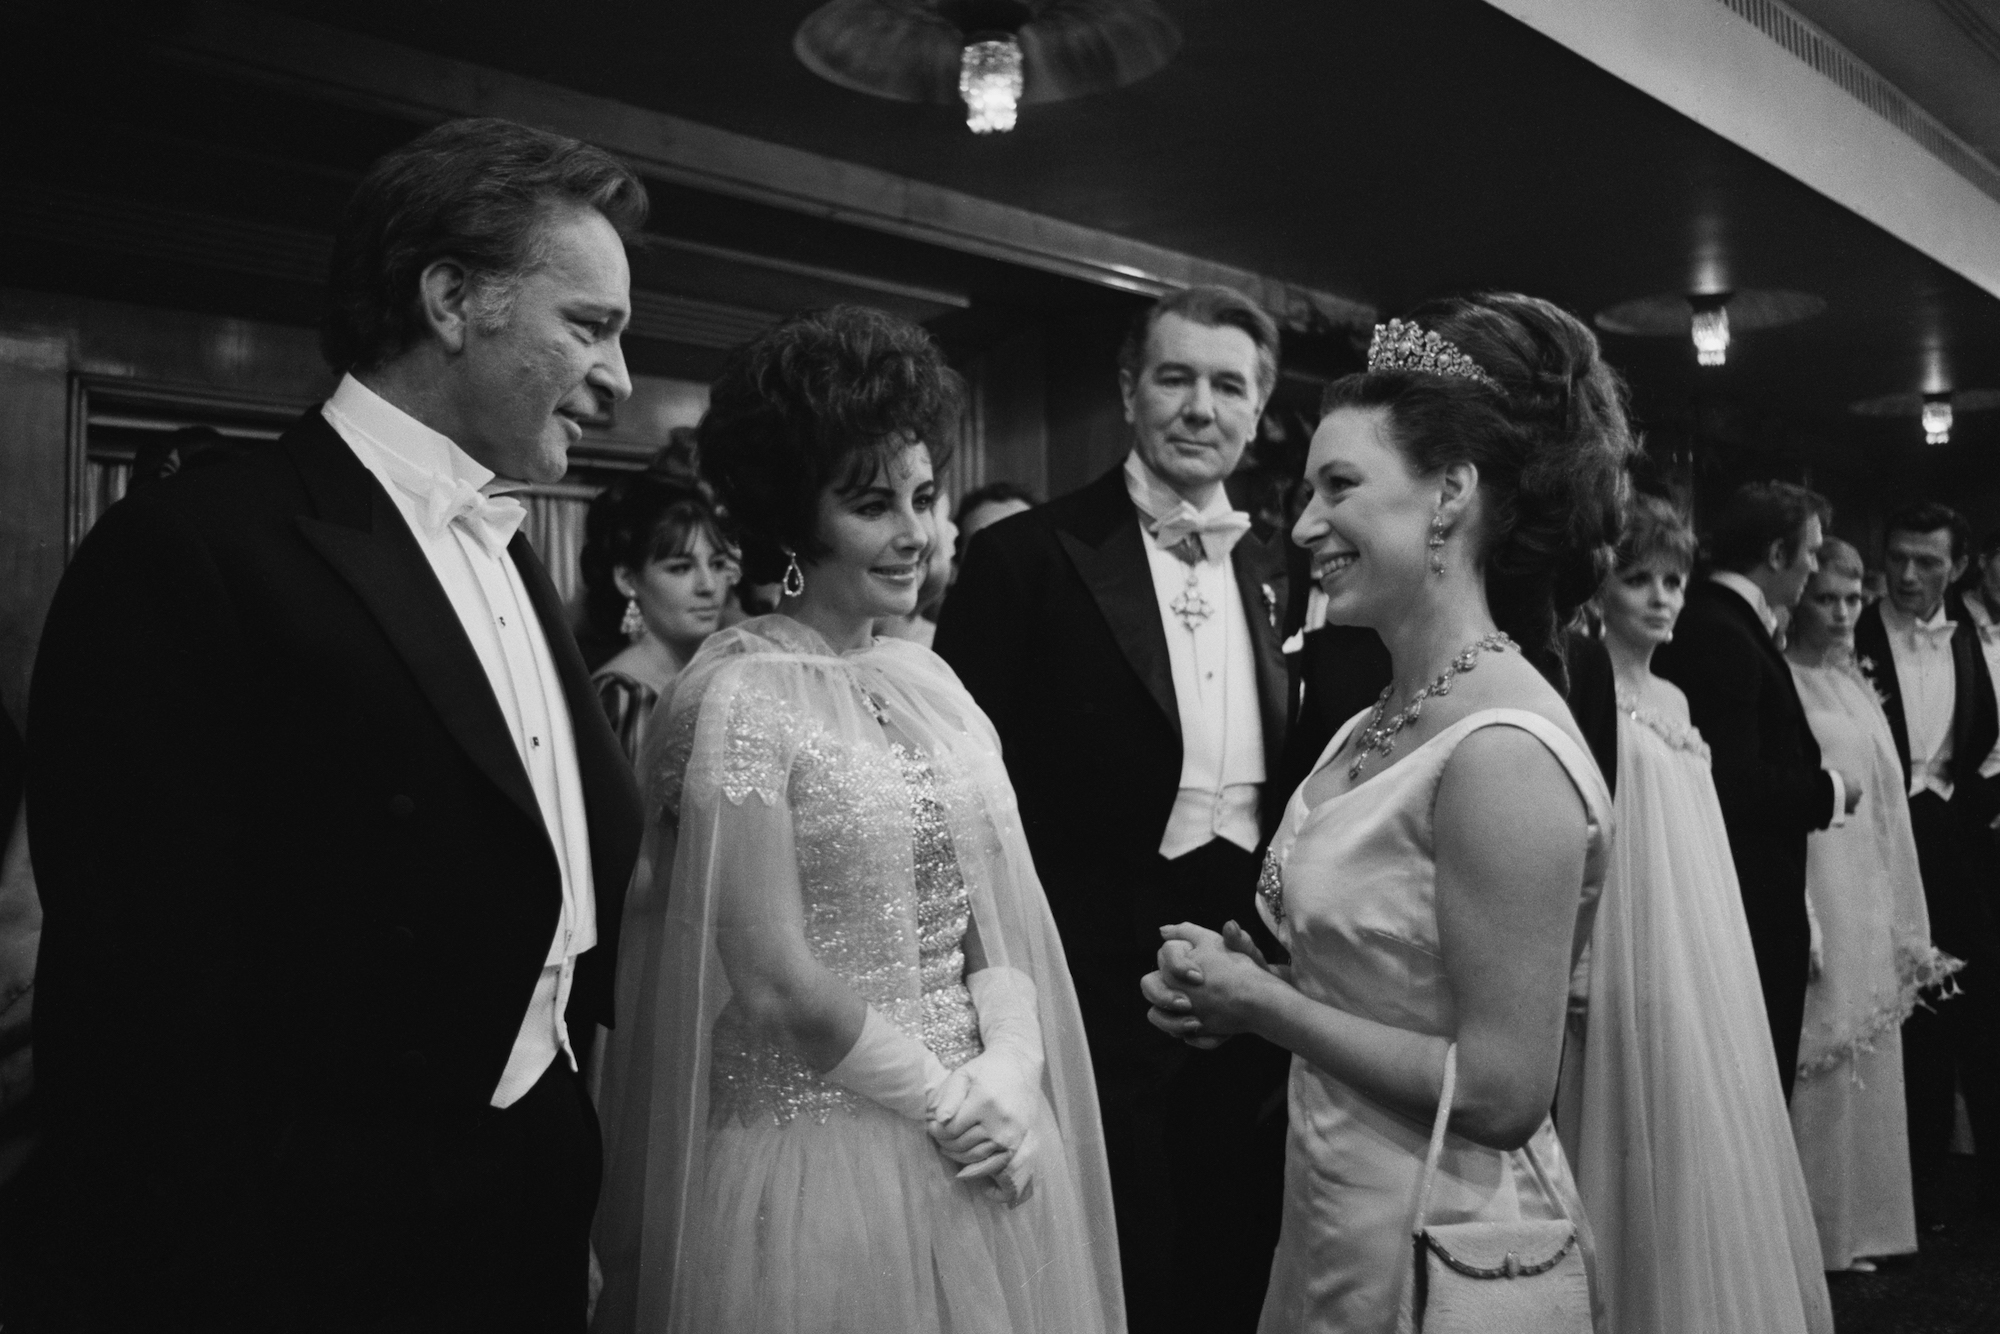 (L-R) Richard Burton, Elizabeth Taylor, and Princess Margaret talking, in black and white